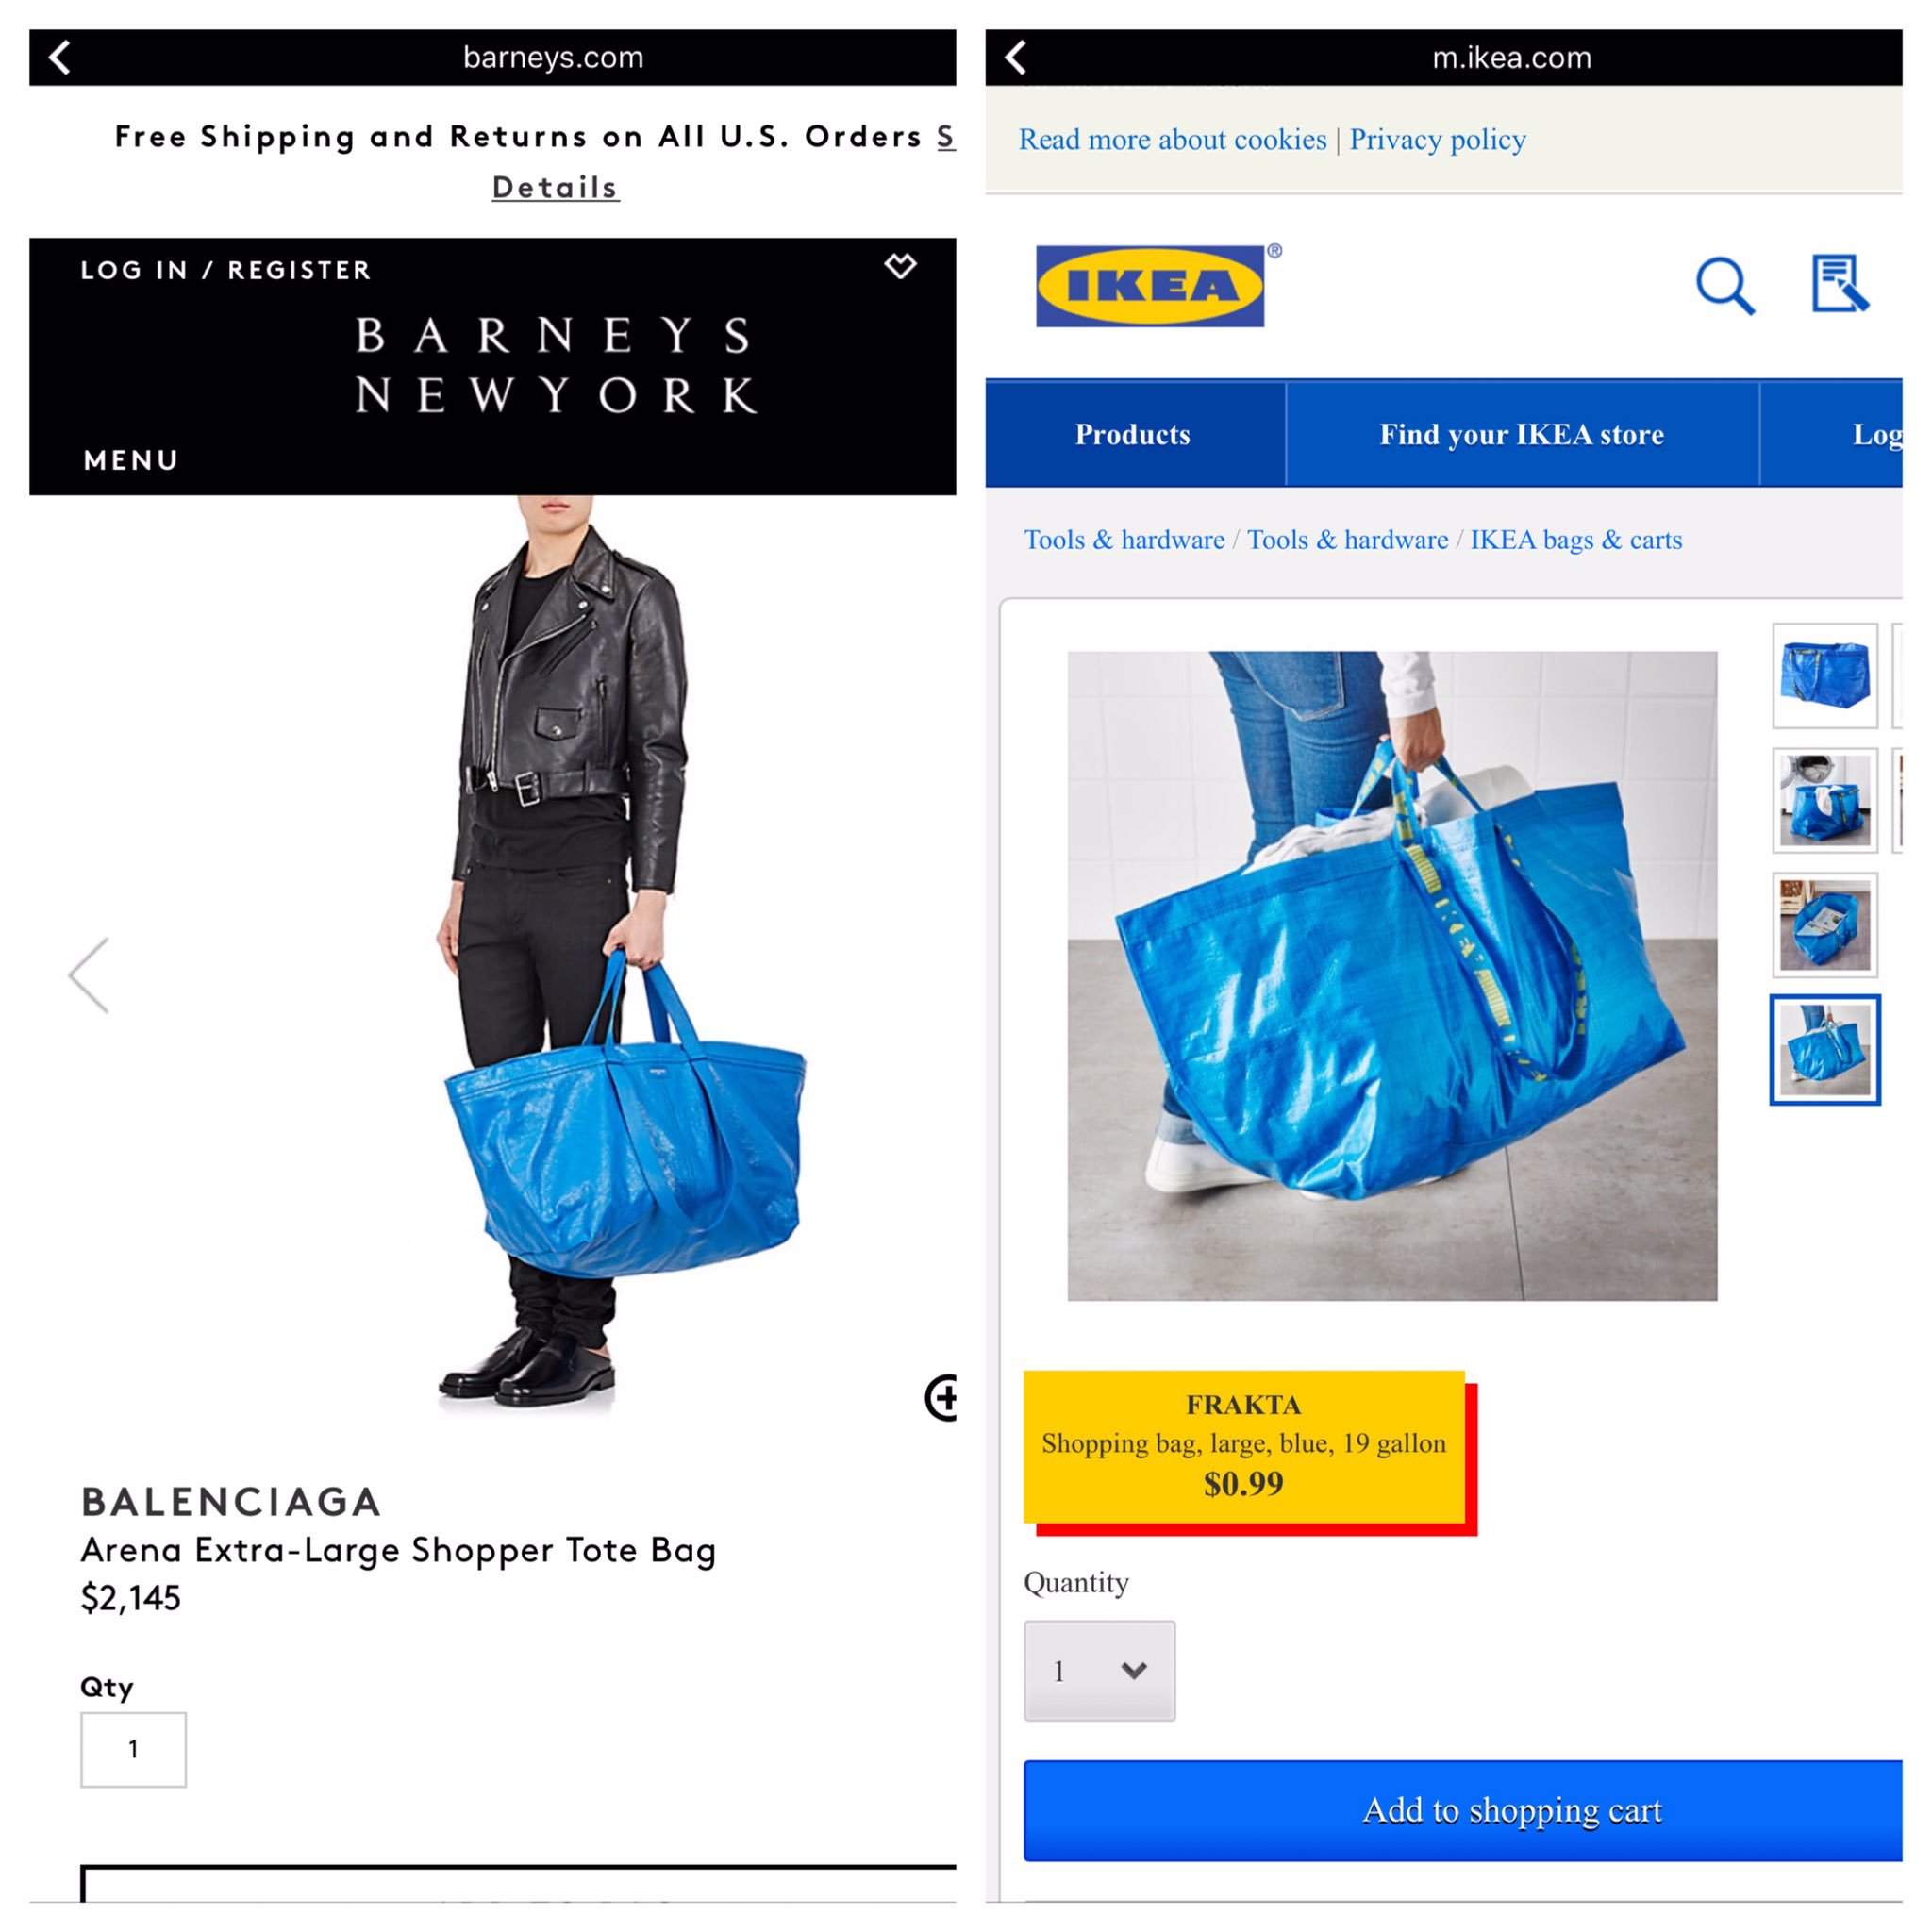 gullig Shetland Uberettiget Neeta on X: "Balenciaga does it again! Arena bag $2145 vs Ikea's Frakta for  $0.99 https://t.co/MLcUsZLBWa" / X